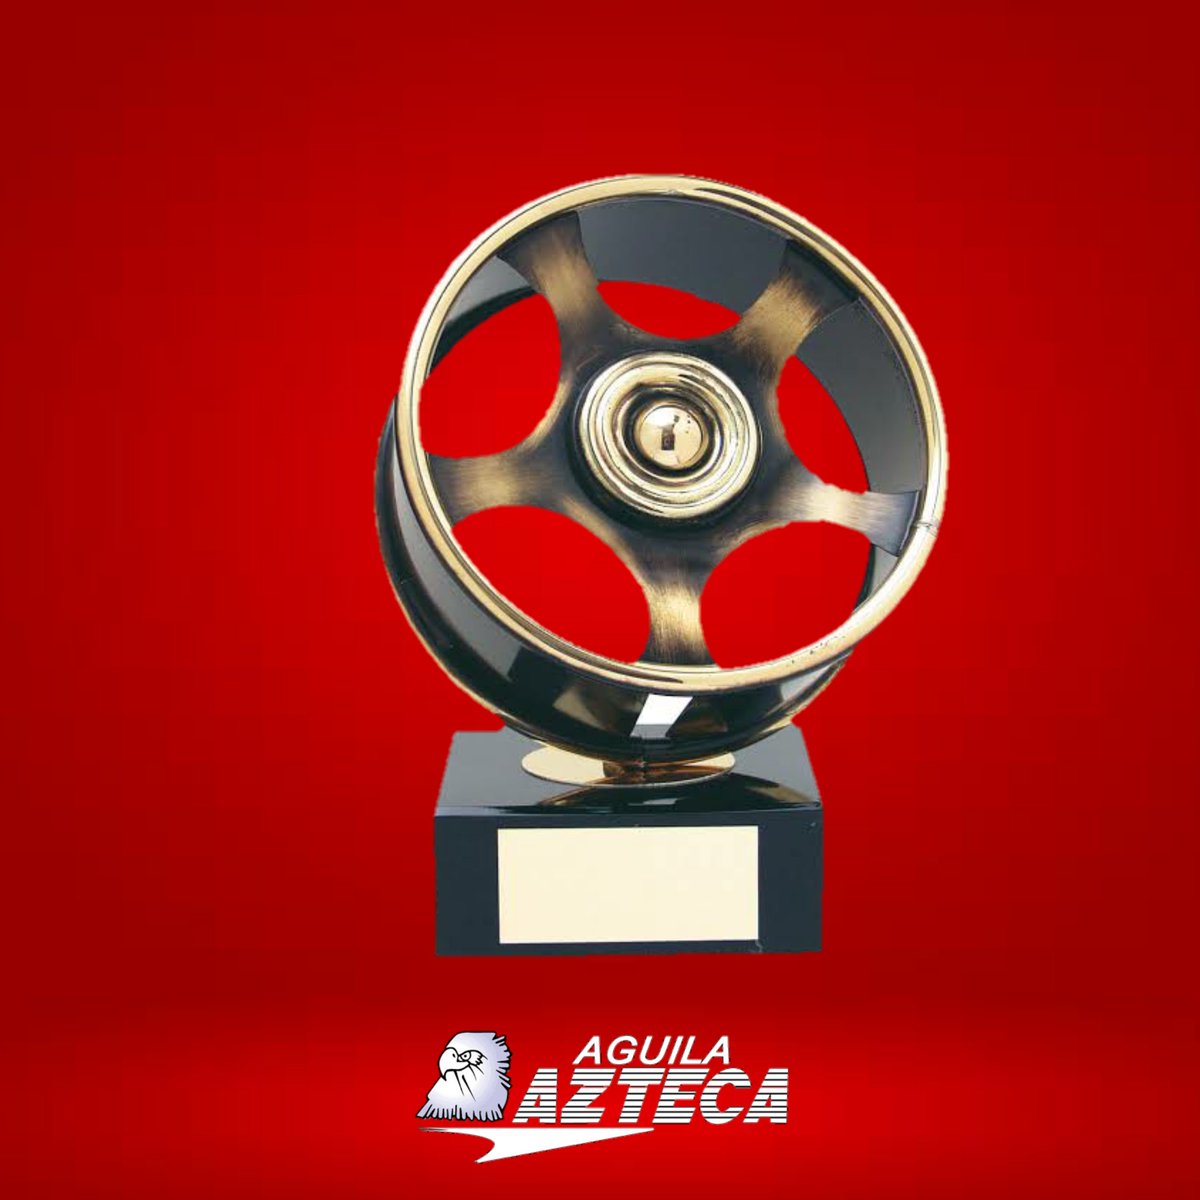 And the #Oscar goes to... #ÁguilaAzteca

 #AAtires #Llantas #Llanta #Rines #Rin #Wheel #Wheels 

#Oscars #Oscars2020 #OscarsAllAccess #Oscares2020